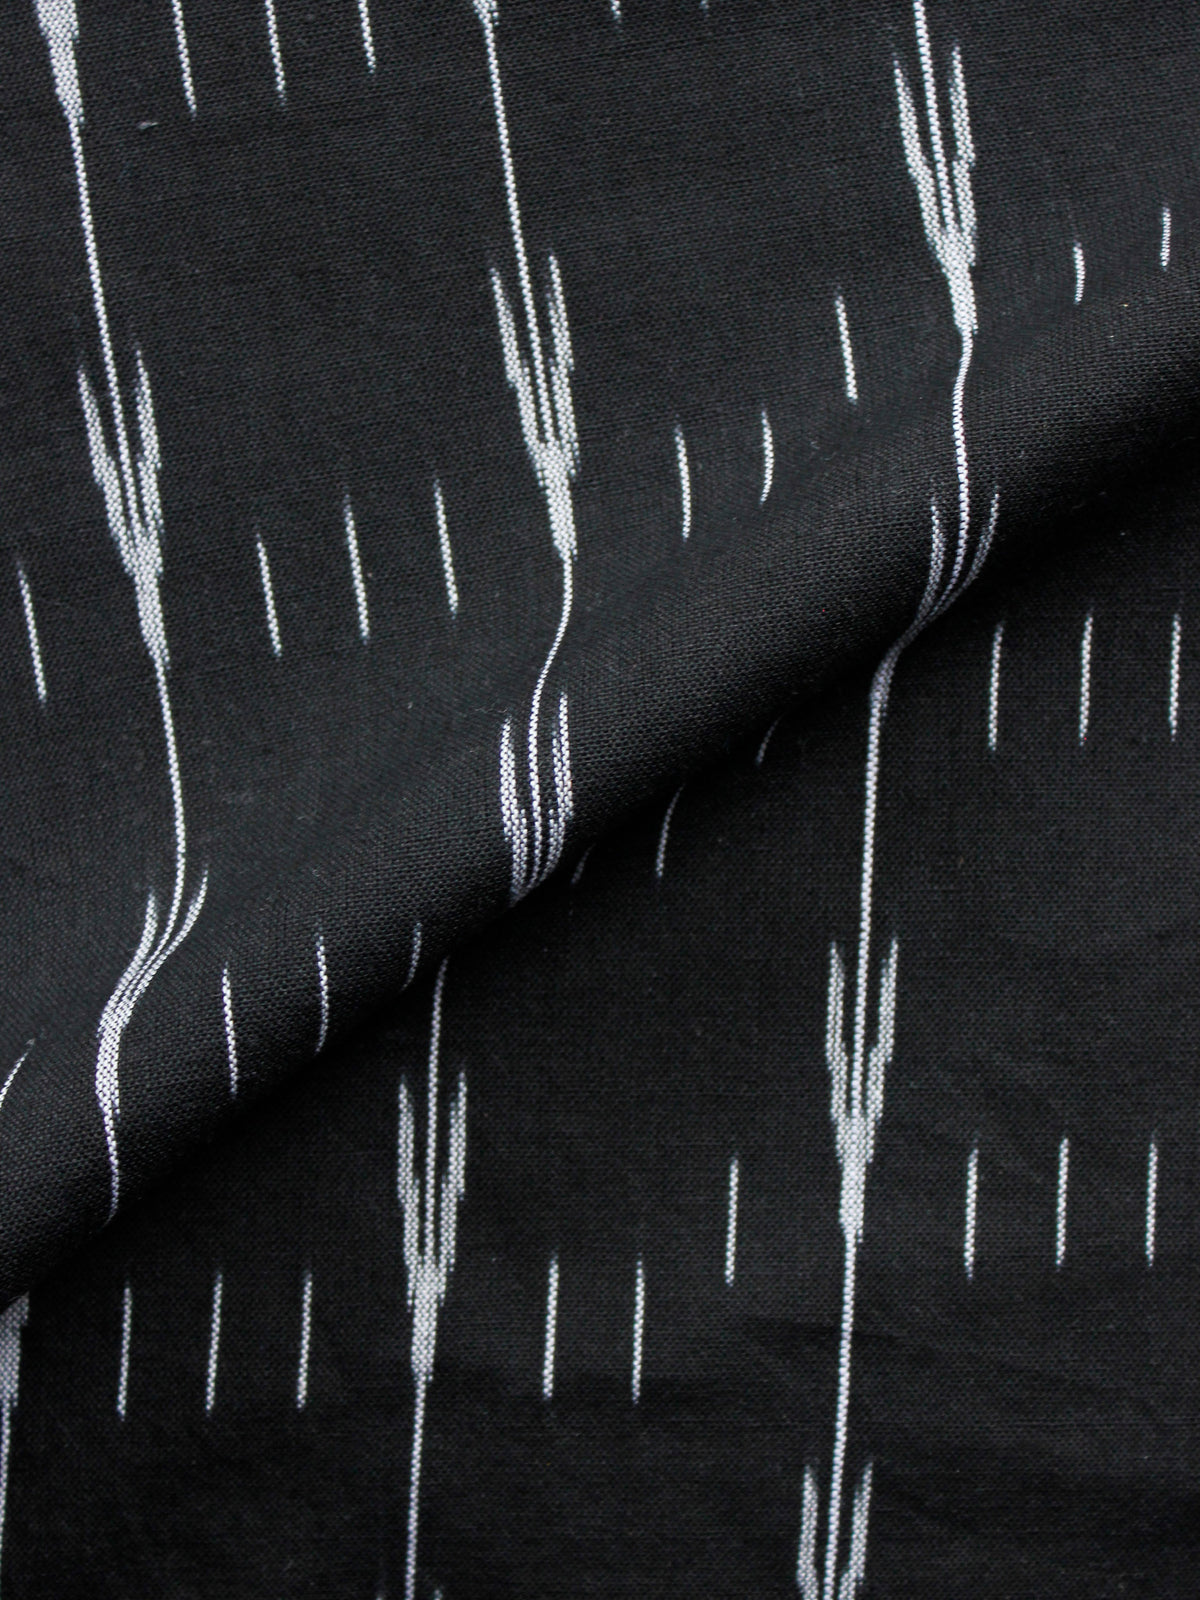 Black White Pochampally Hand Woven Ikat Cotton Fabric Per Meter - F002F1475